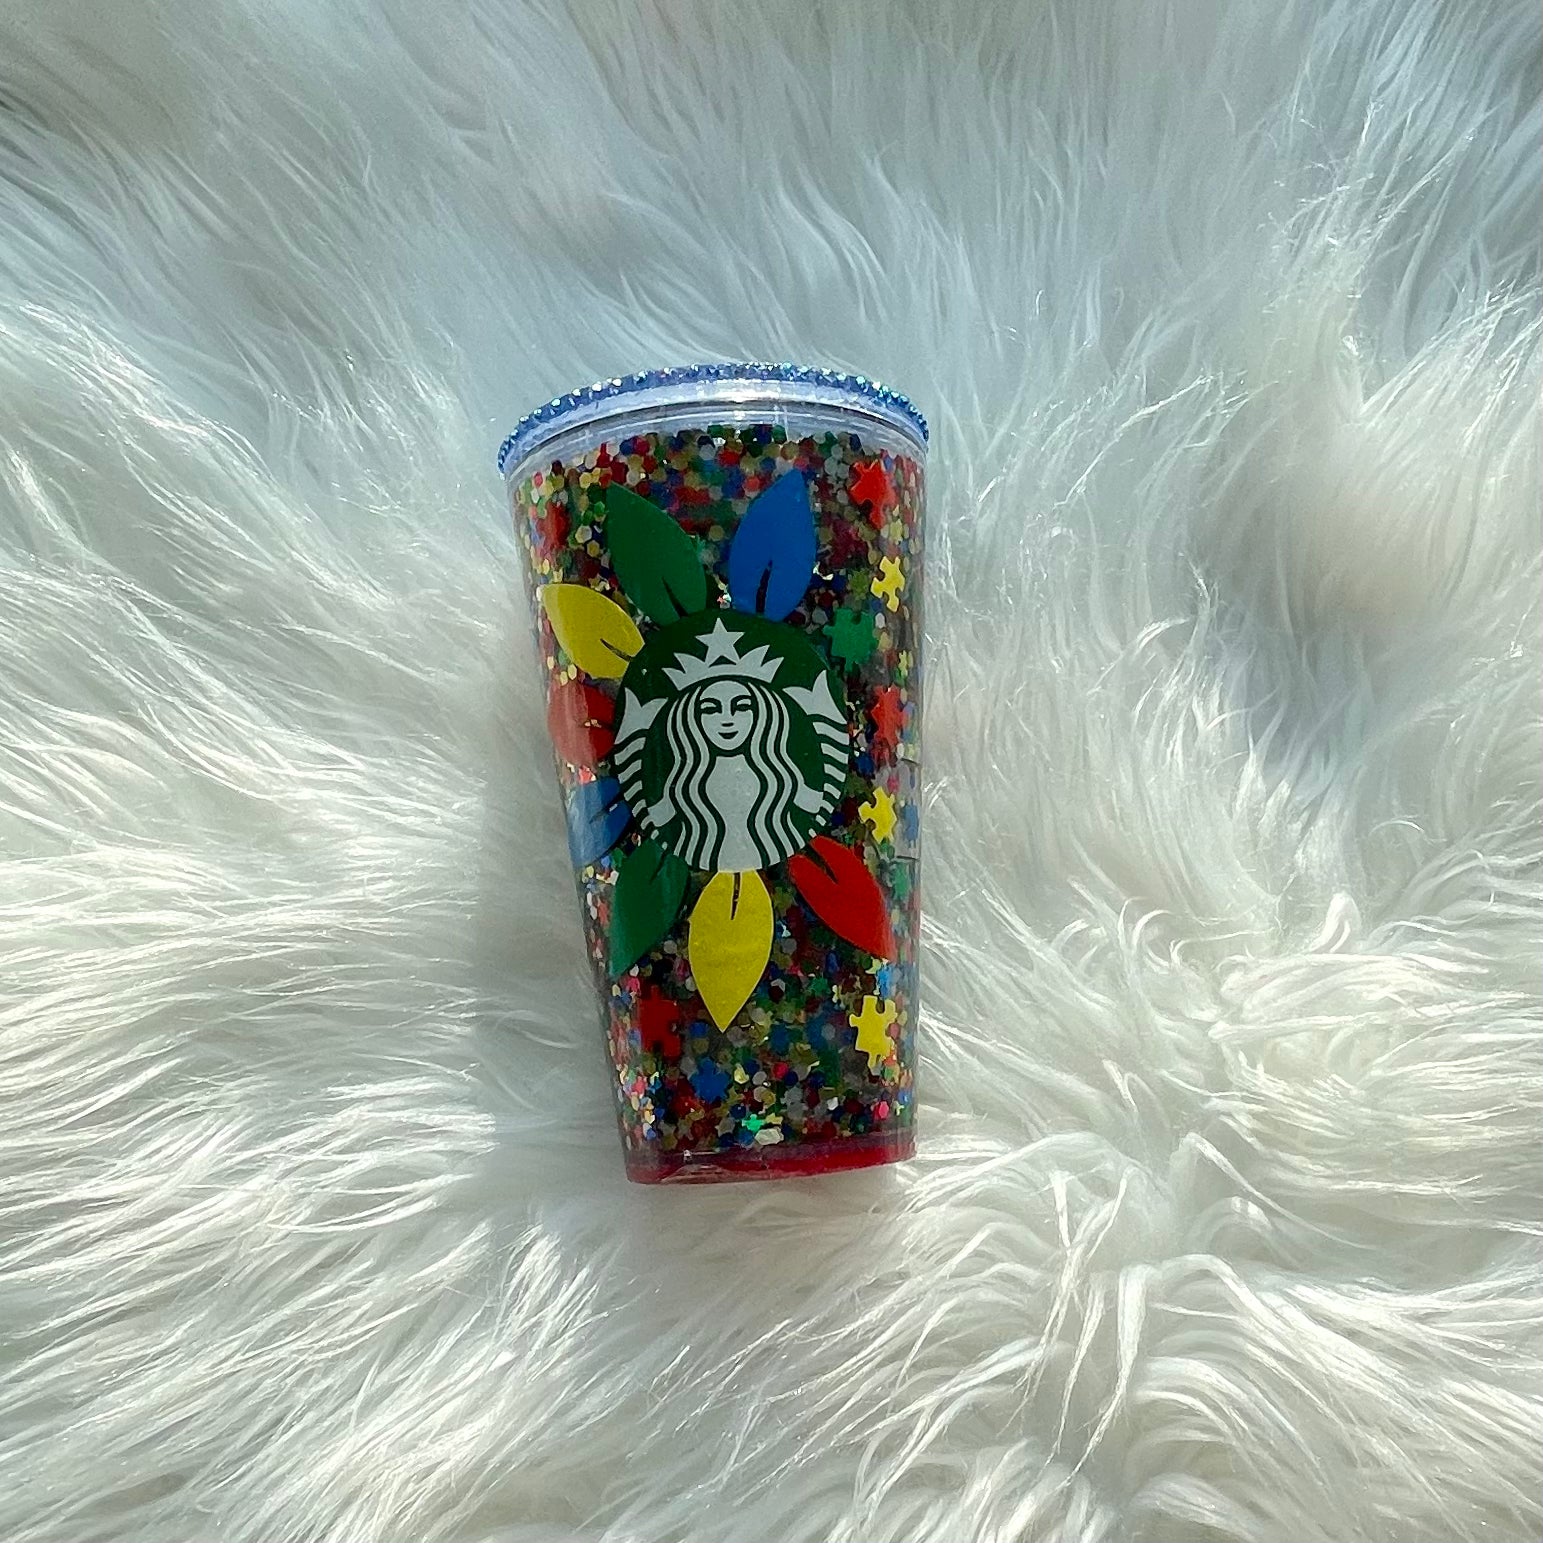 Starbucks 16oz Snow Globe Cup